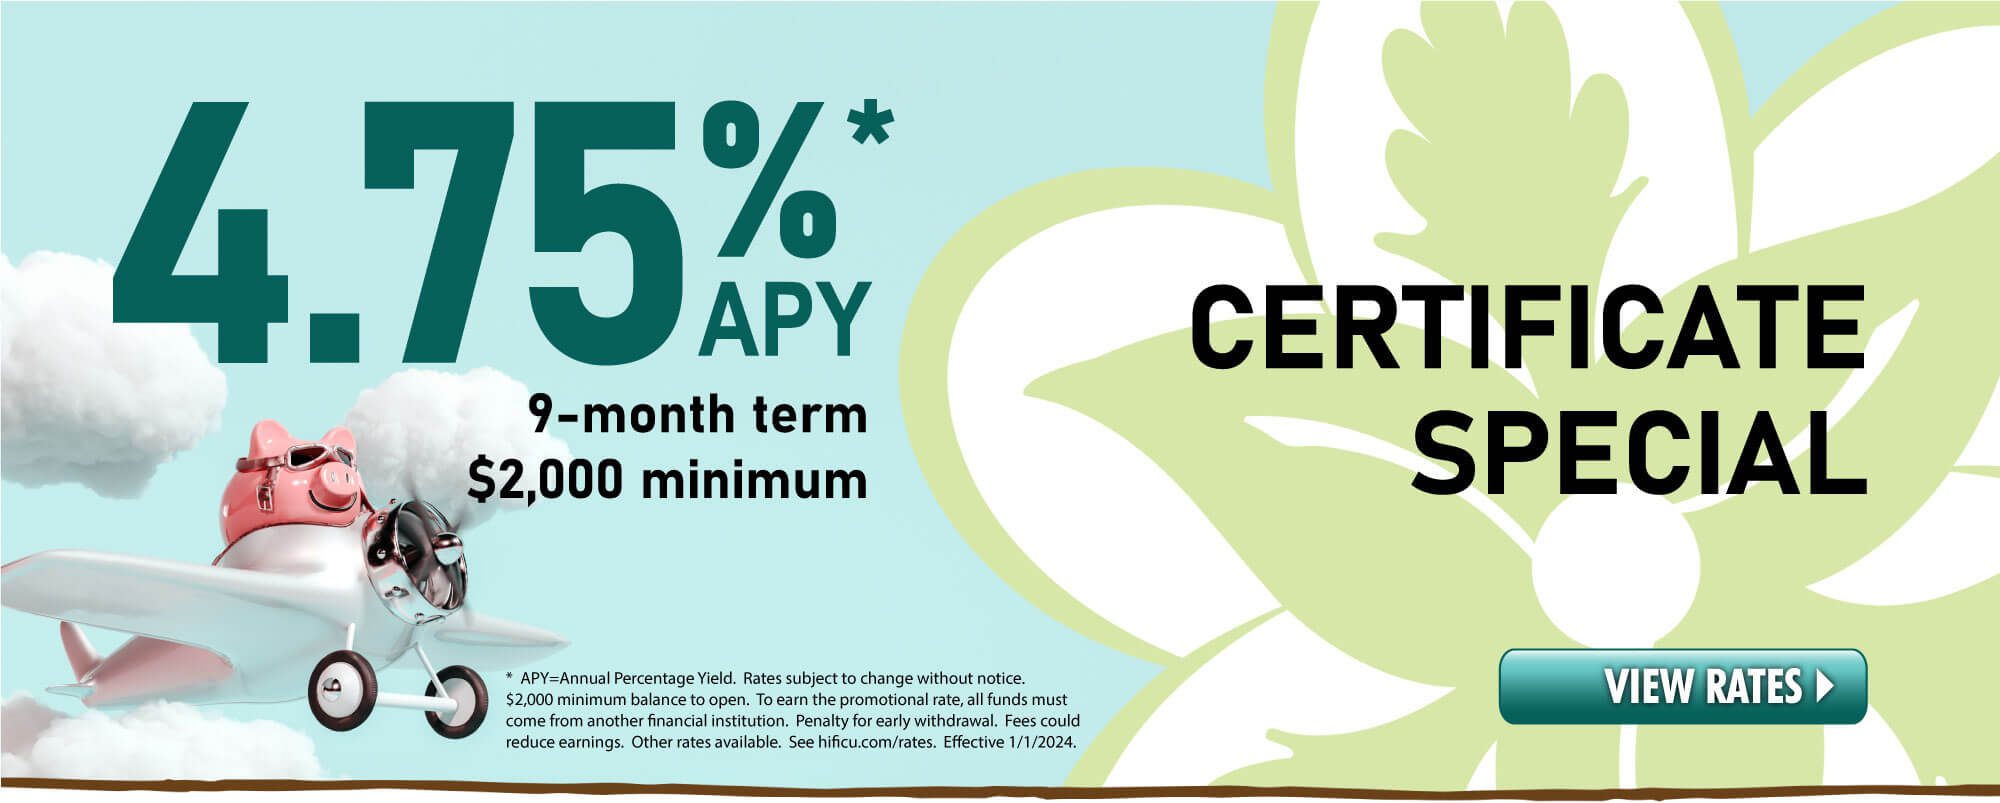 4.75% APY 9-month term. $2,000 minimum. Certificate Special.